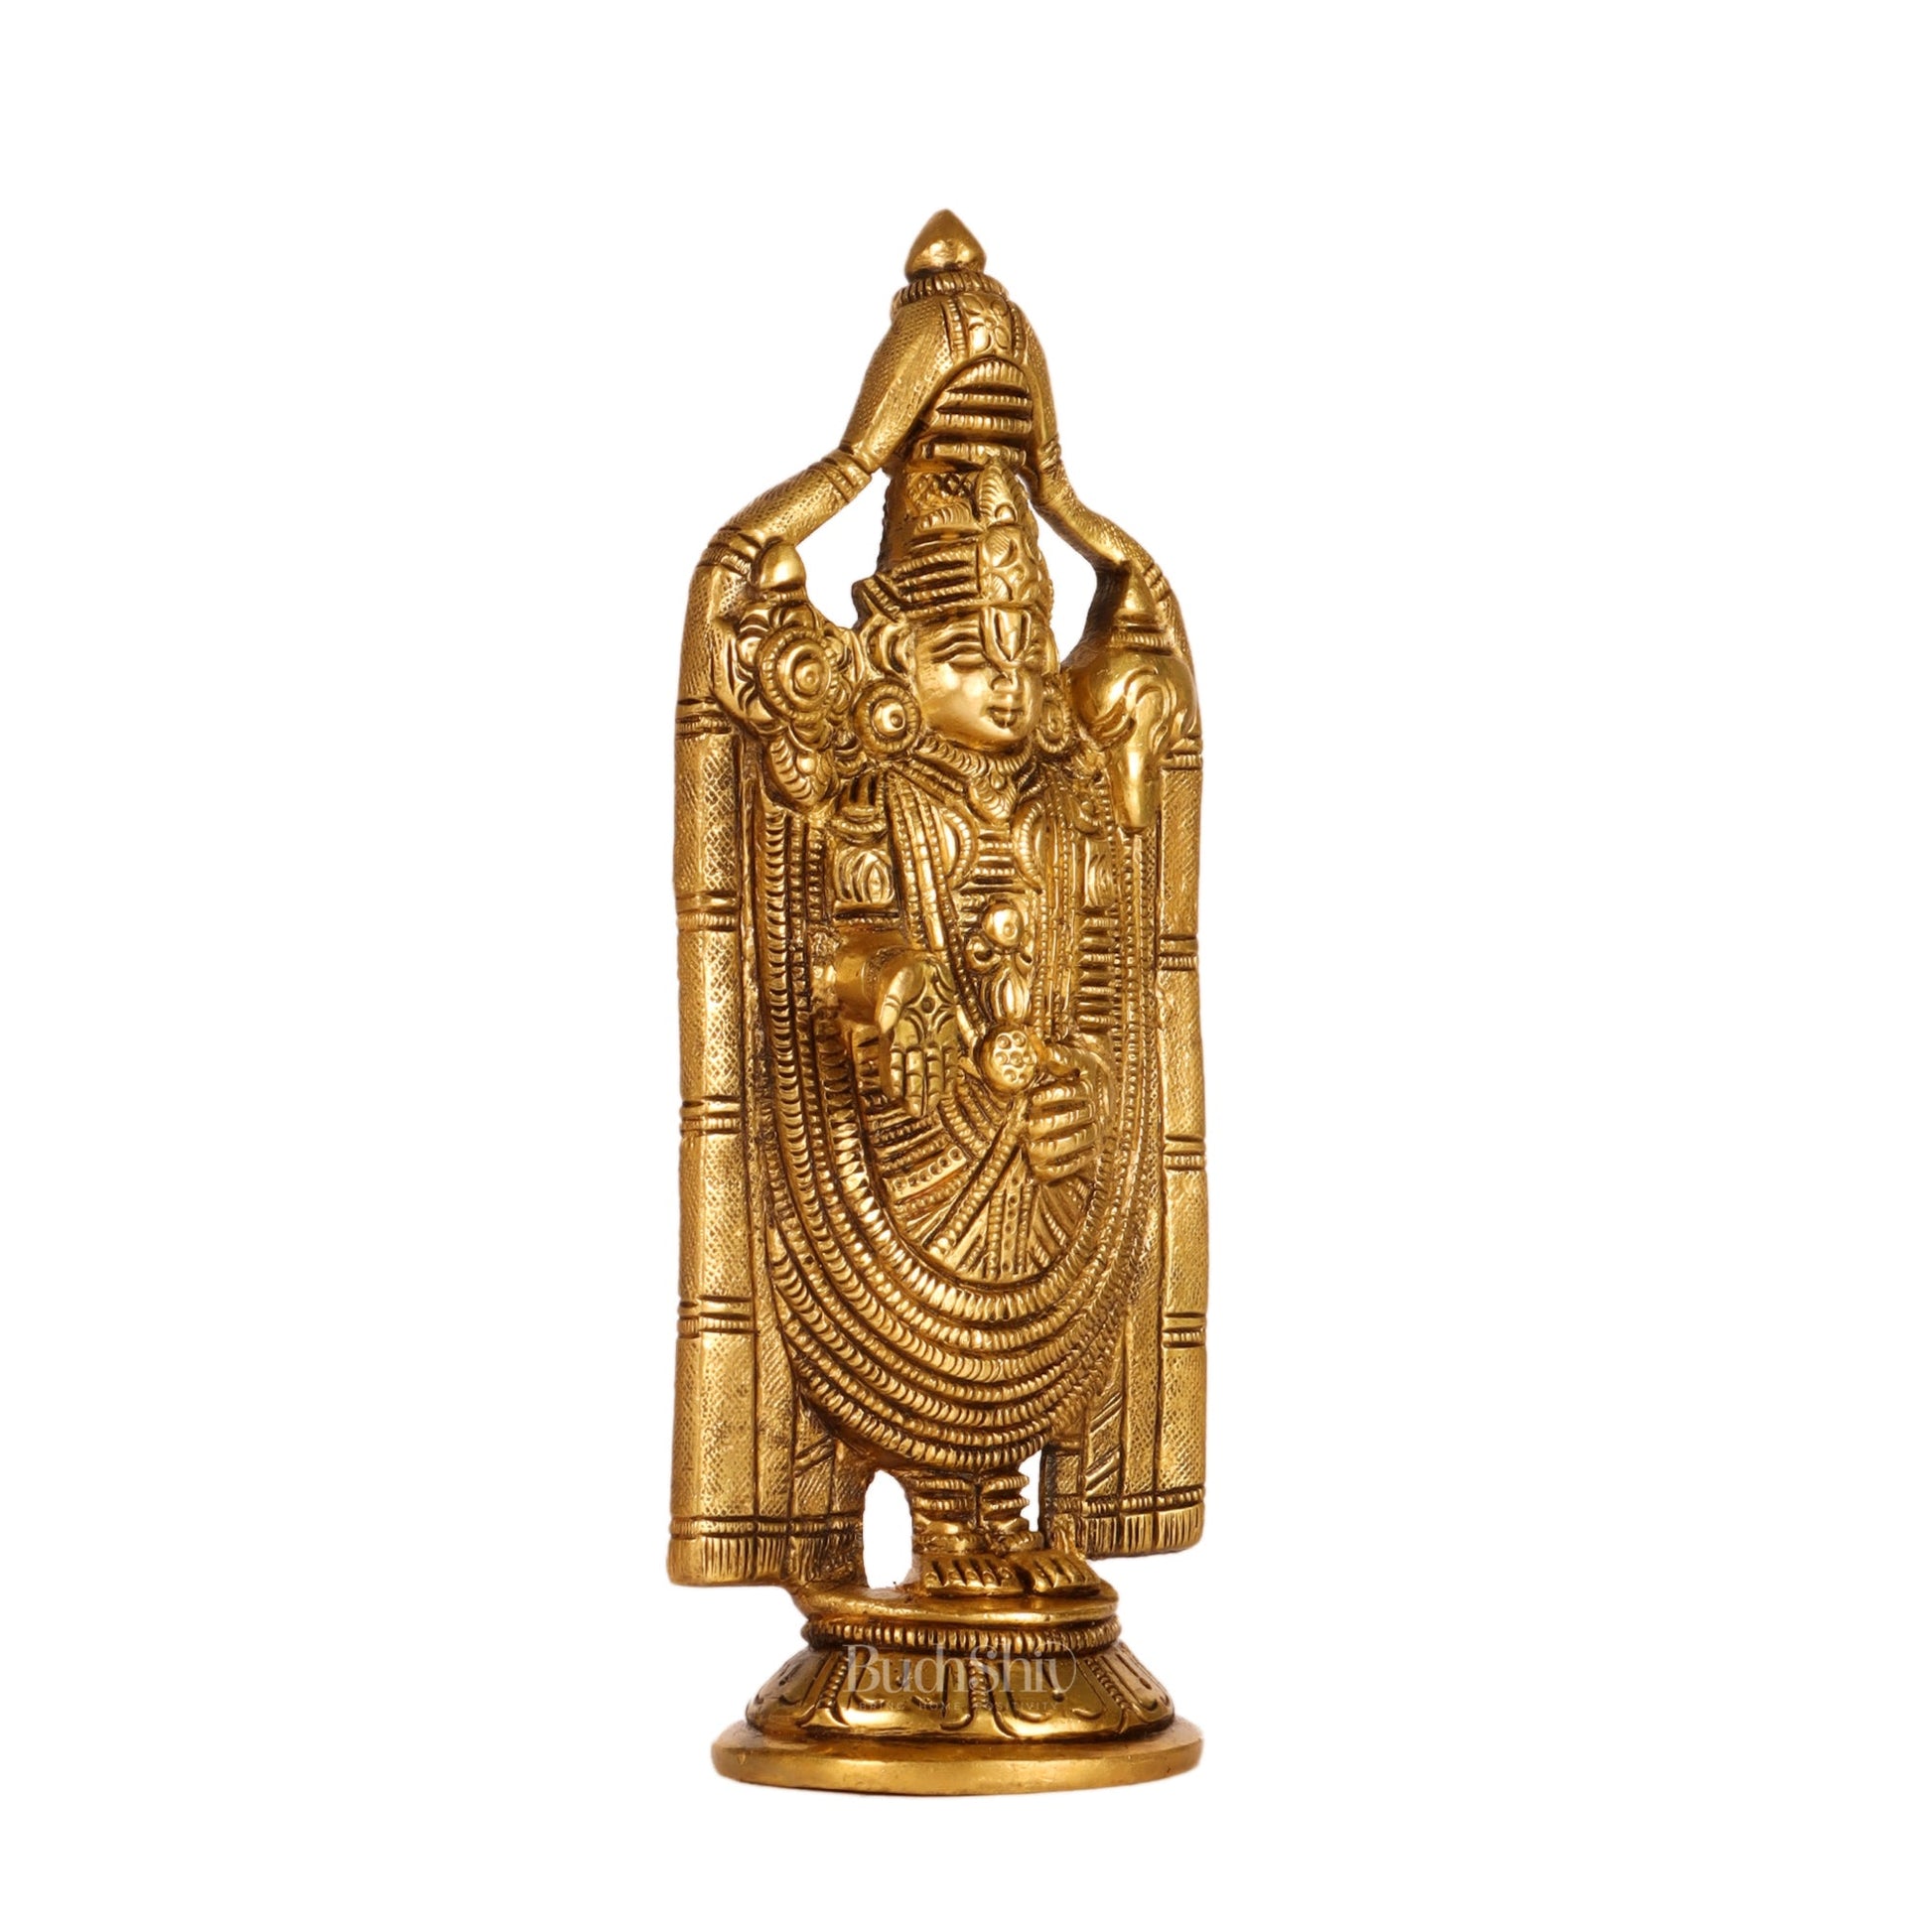 Brass tirupati Balaji statue 8" - Budhshiv.com